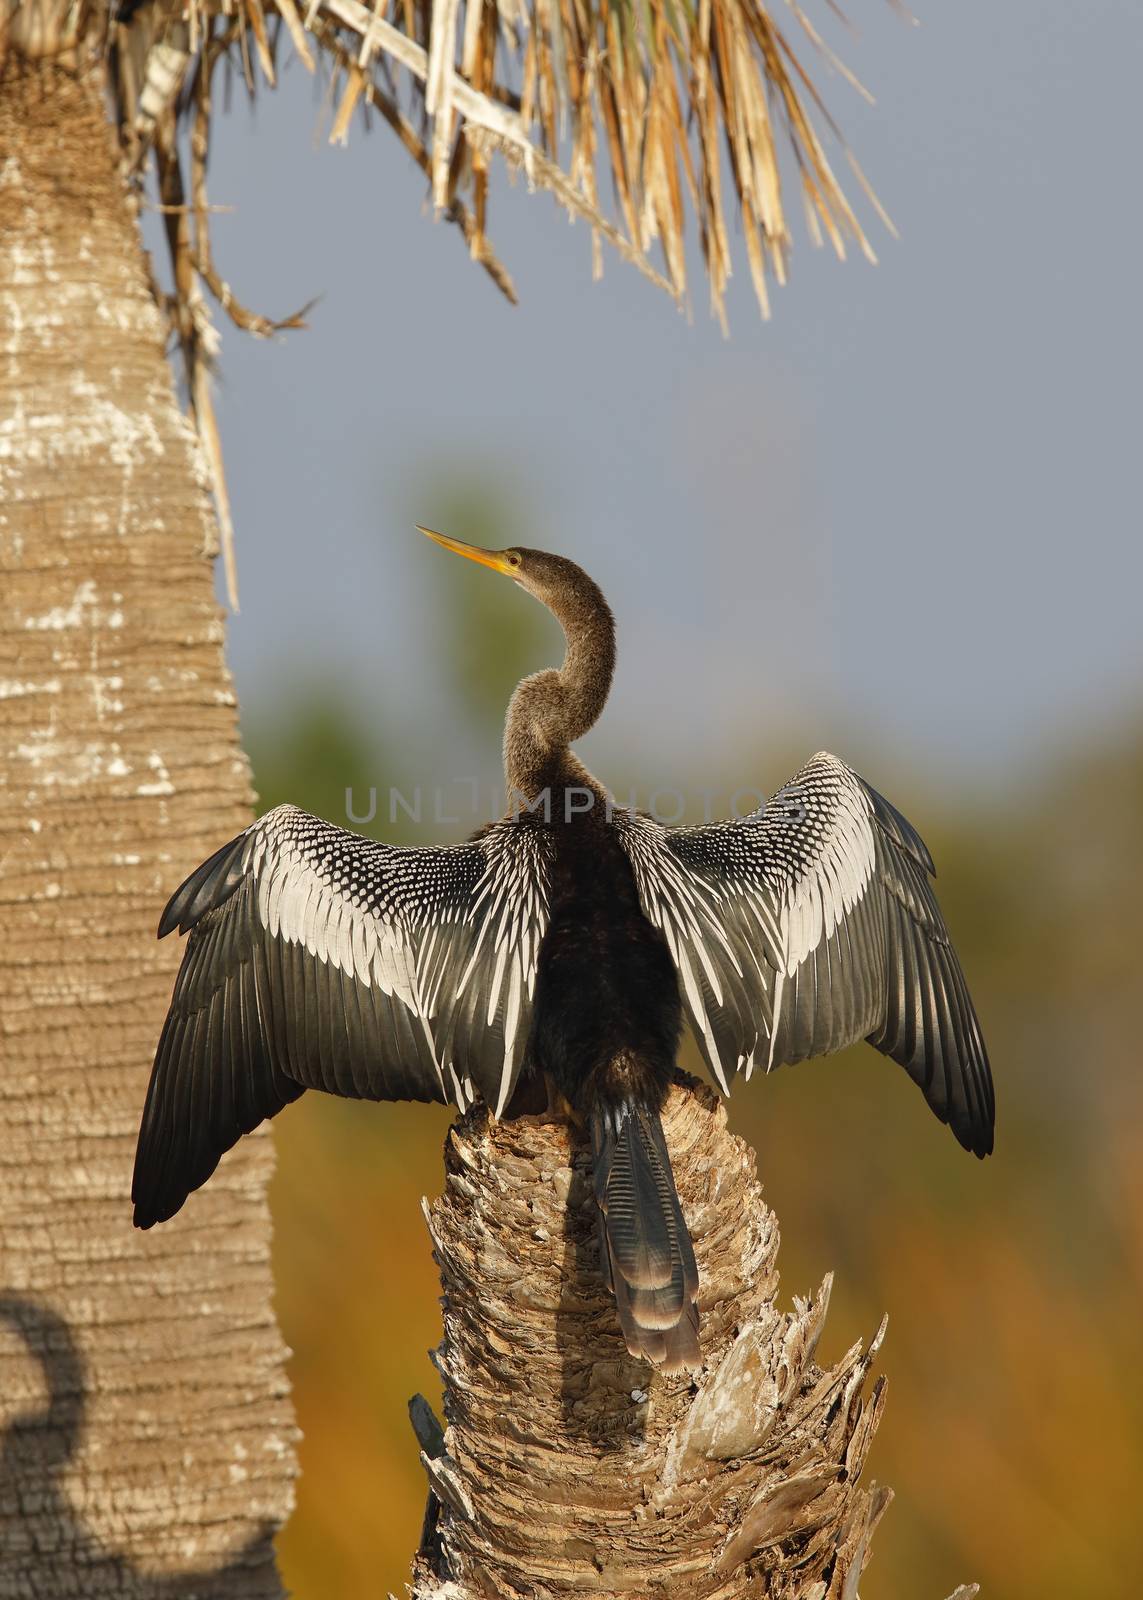 A female Anhinga (Anhinga anhinga) stretches its wings to dry on a palm tree stump - Melbourne, Florida